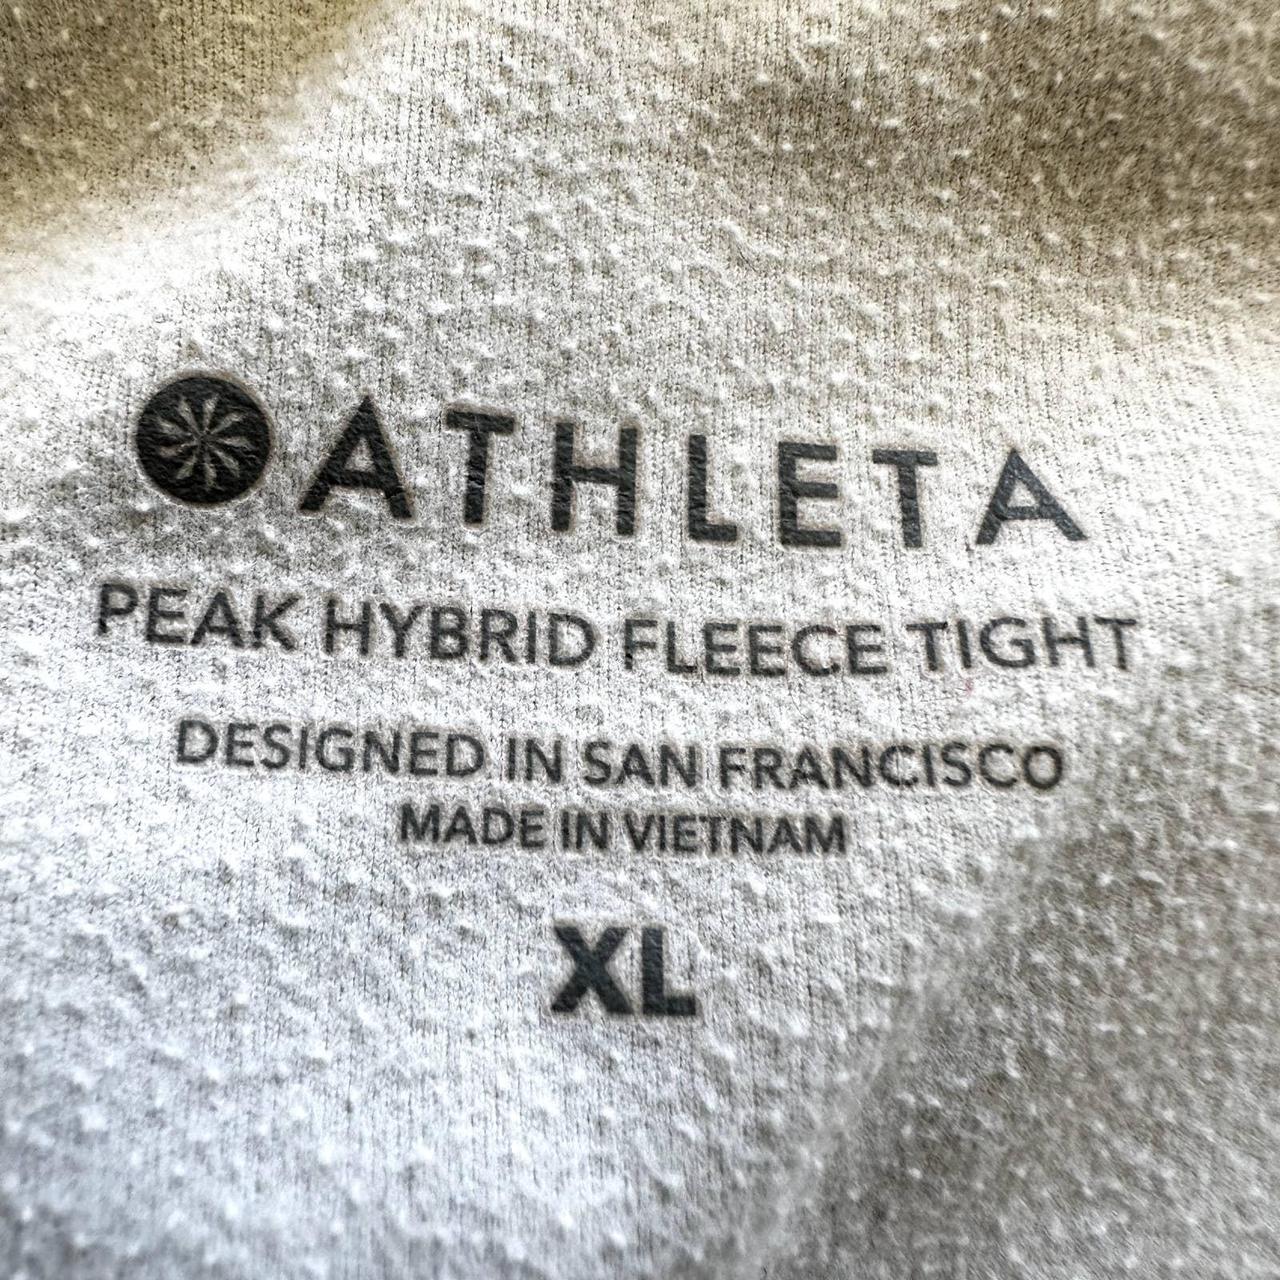 Athleta Peak Hybrid Fleece Tight